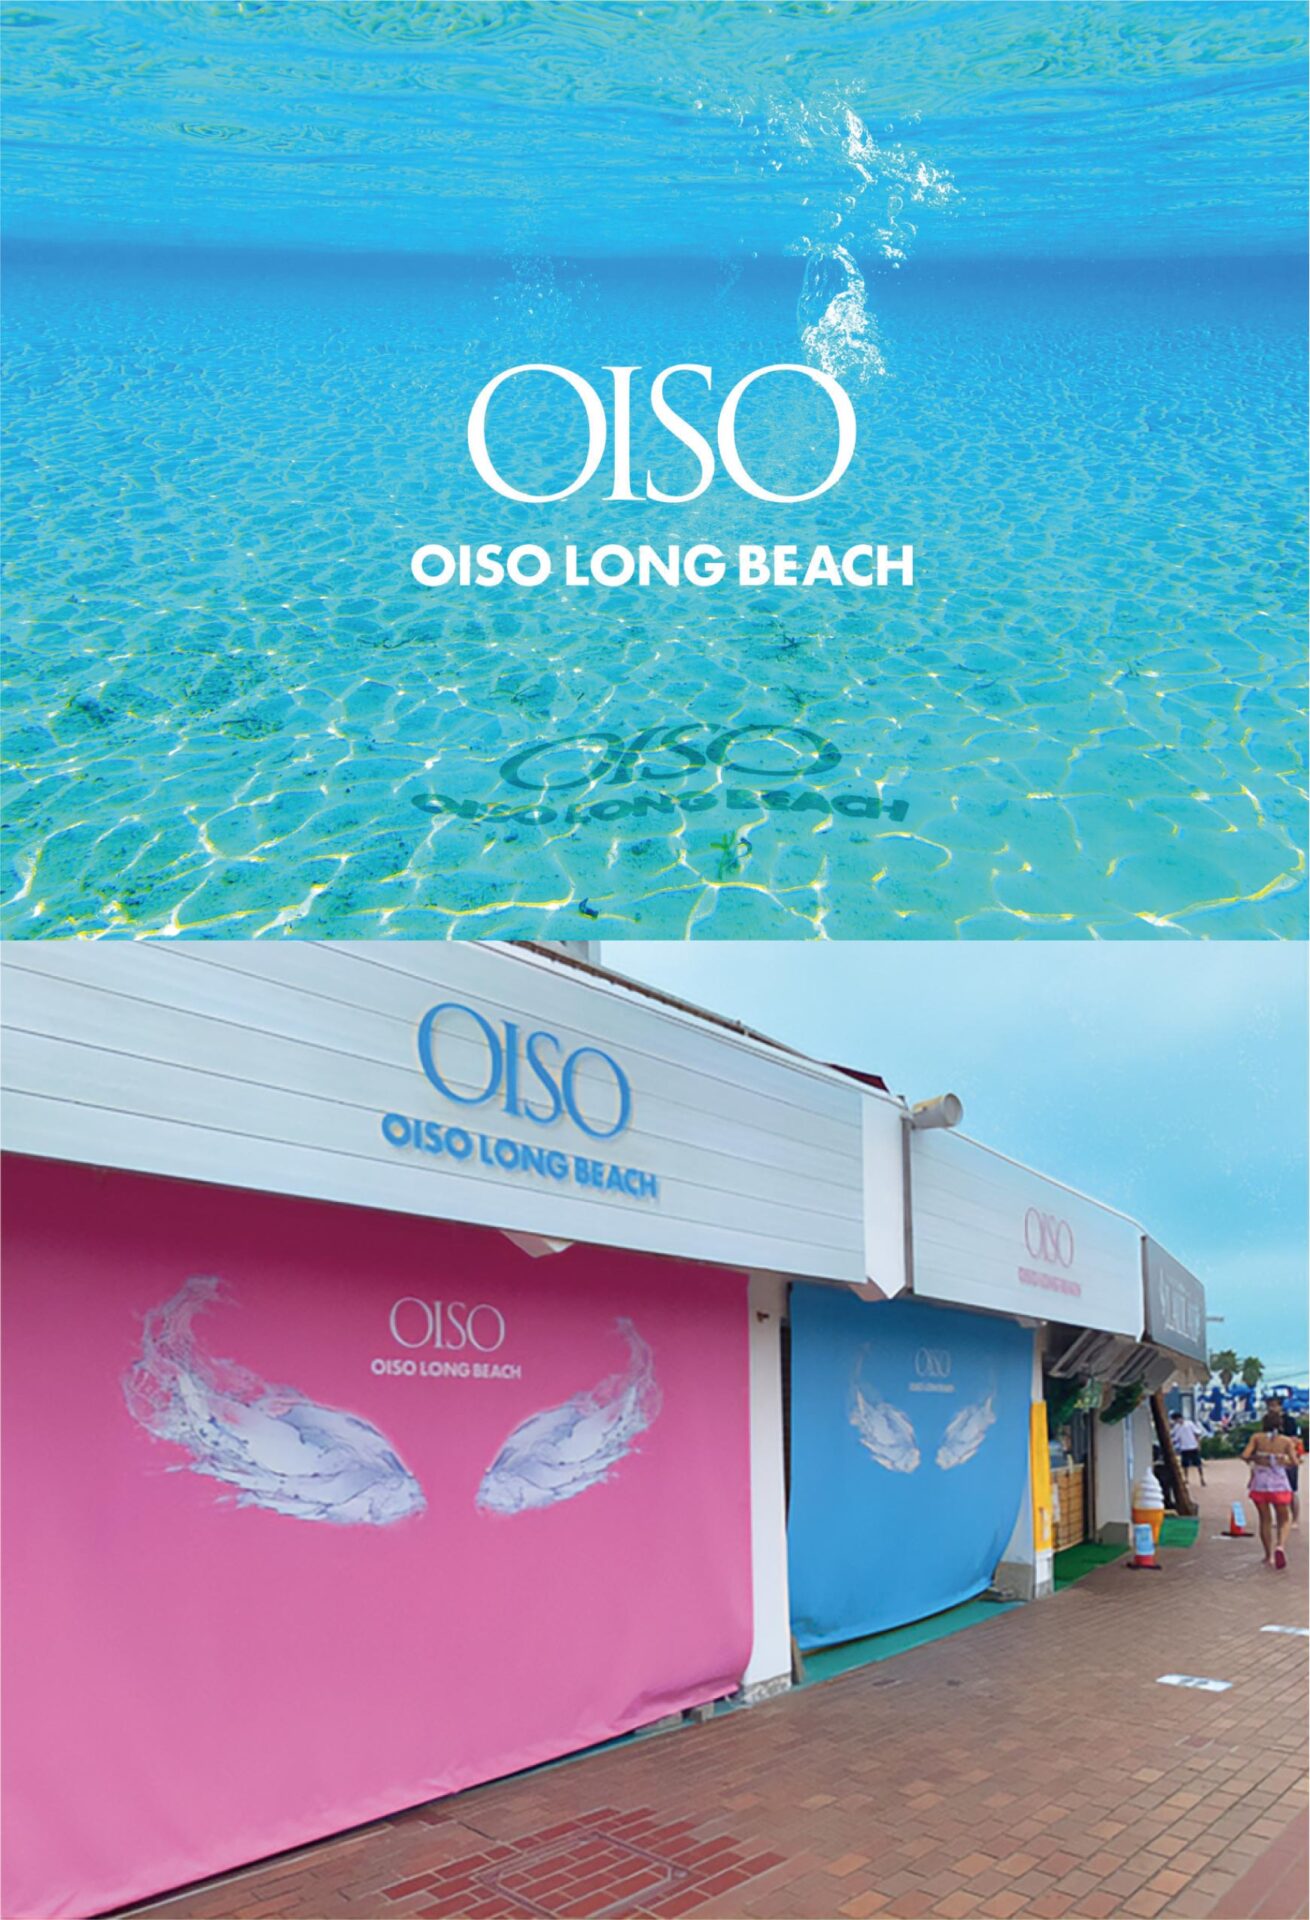 「PRINCE HOTEL OISO LONG BEACH」の実績画像